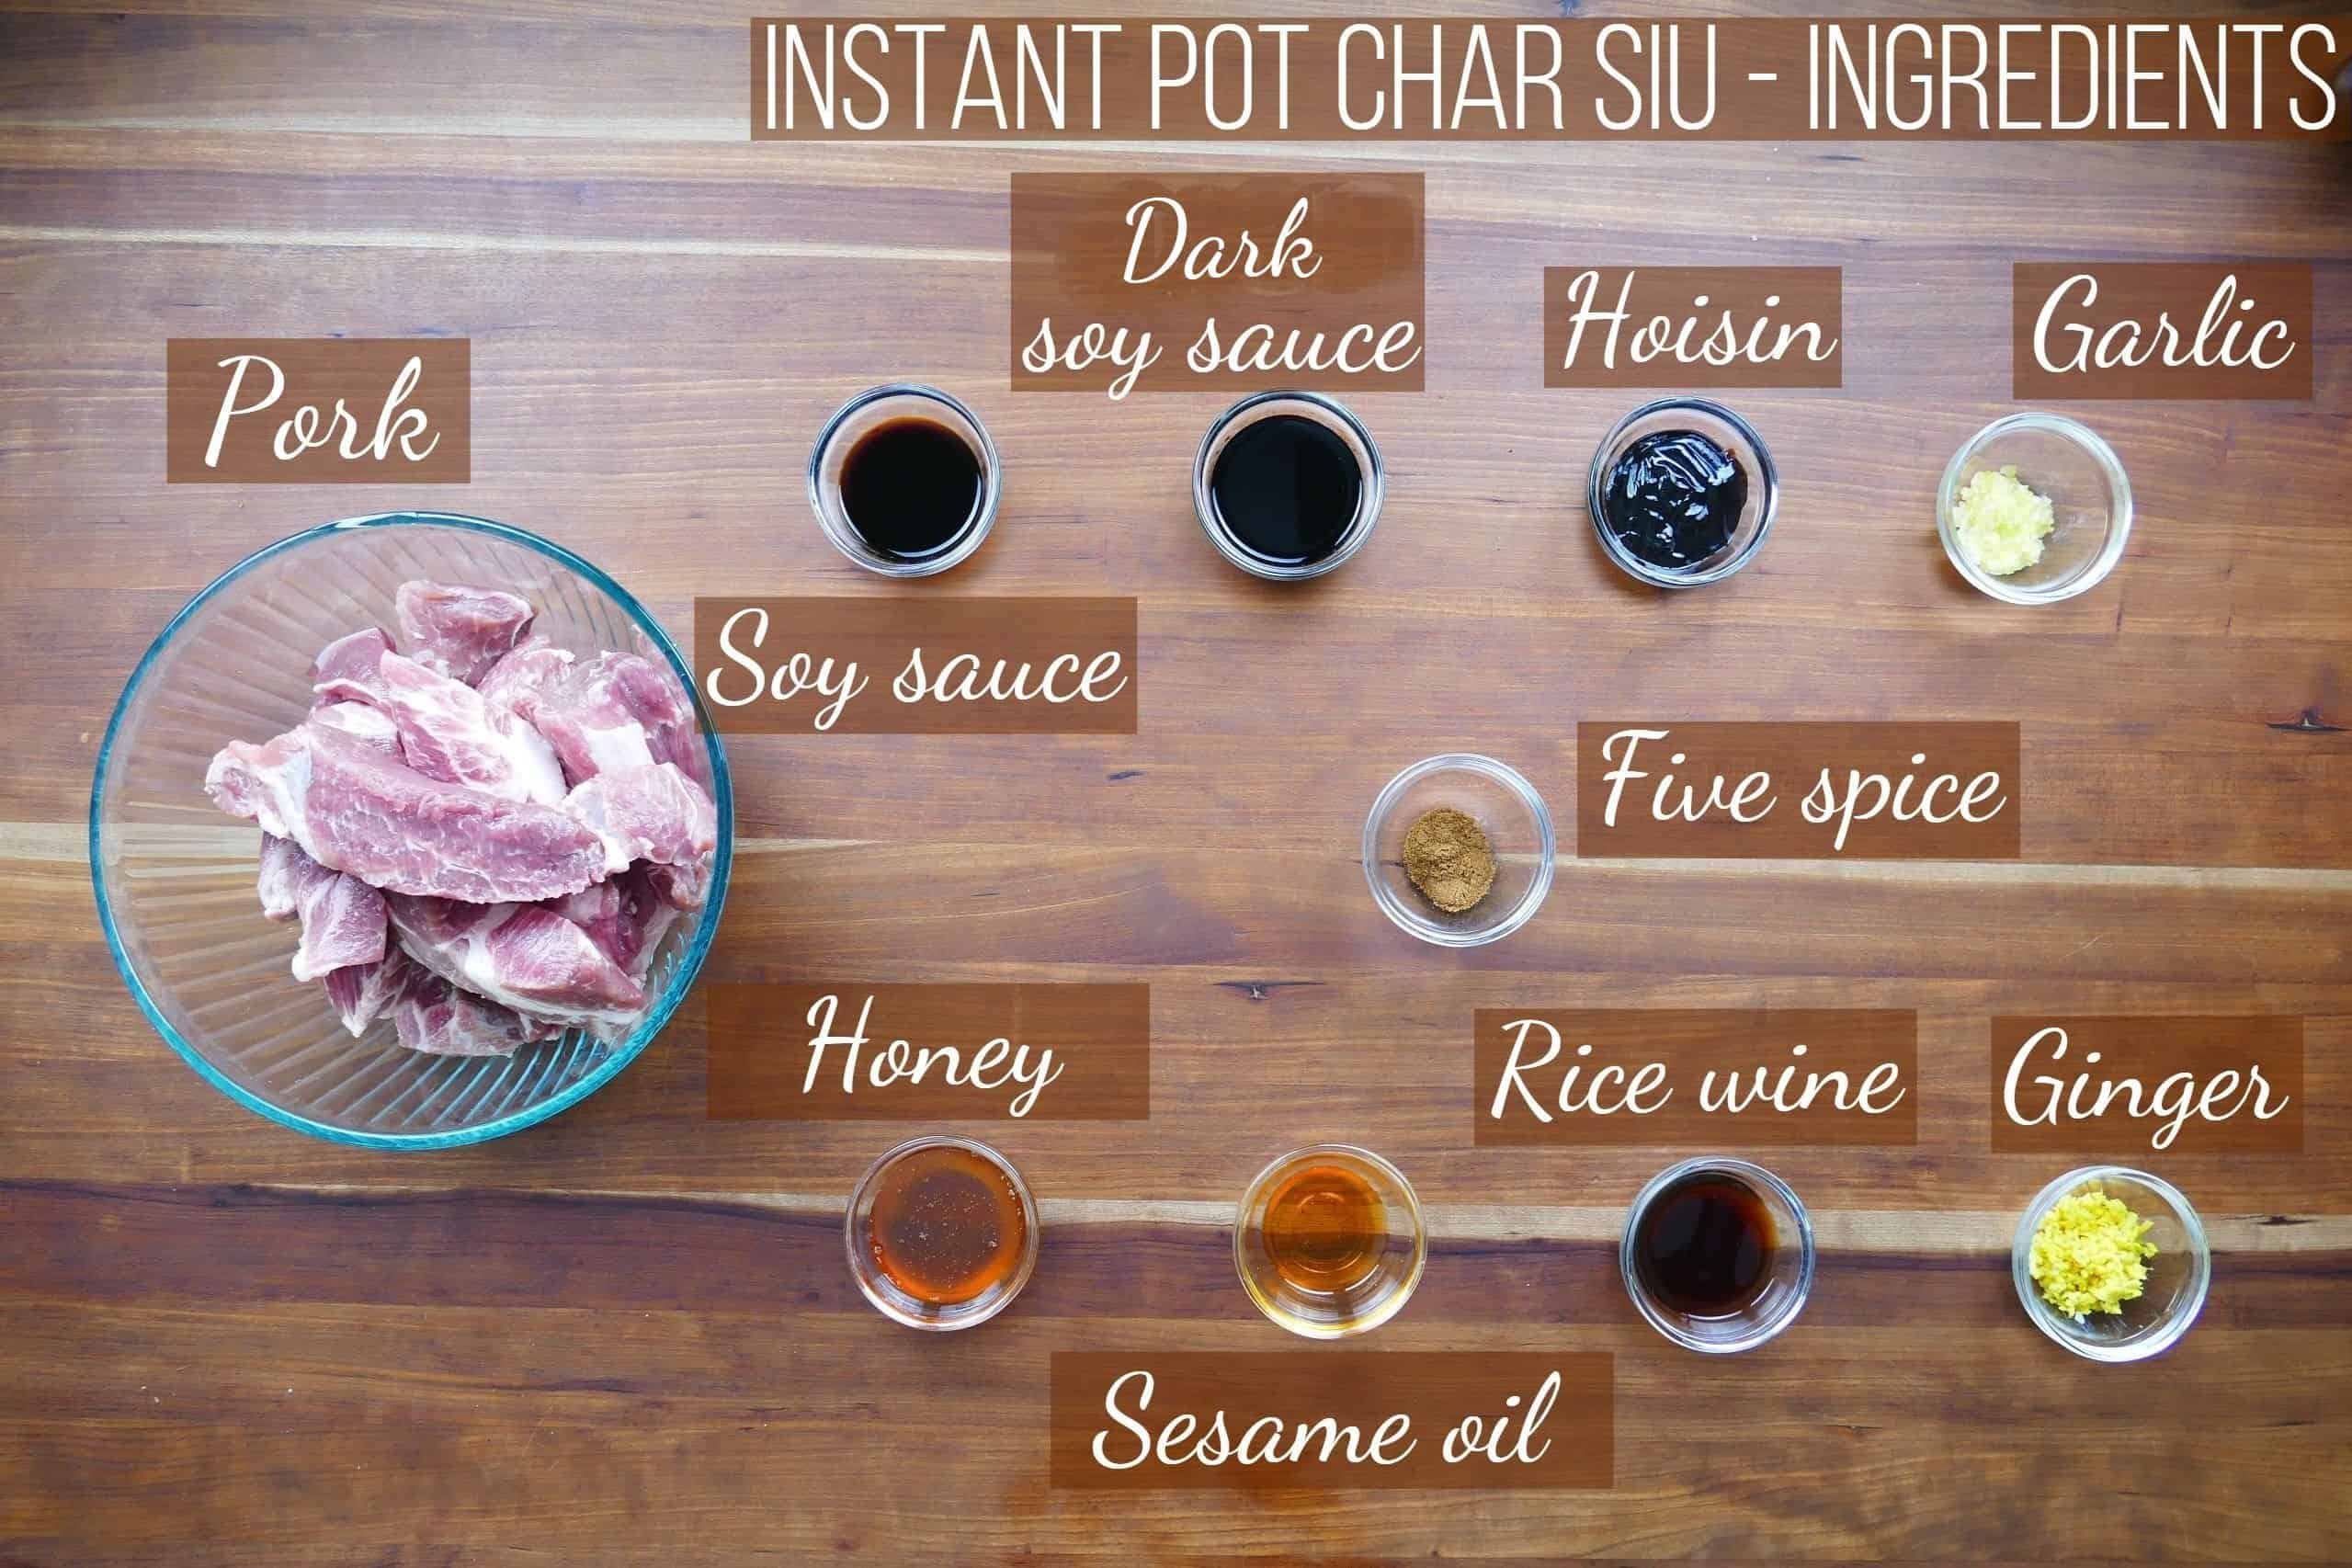 Instant Pot Char Siu Ingredients - pork, soy sauce, dark soy sauce, hoisin, garlic, five spice, honey, sesame oil, rice wine, ginger